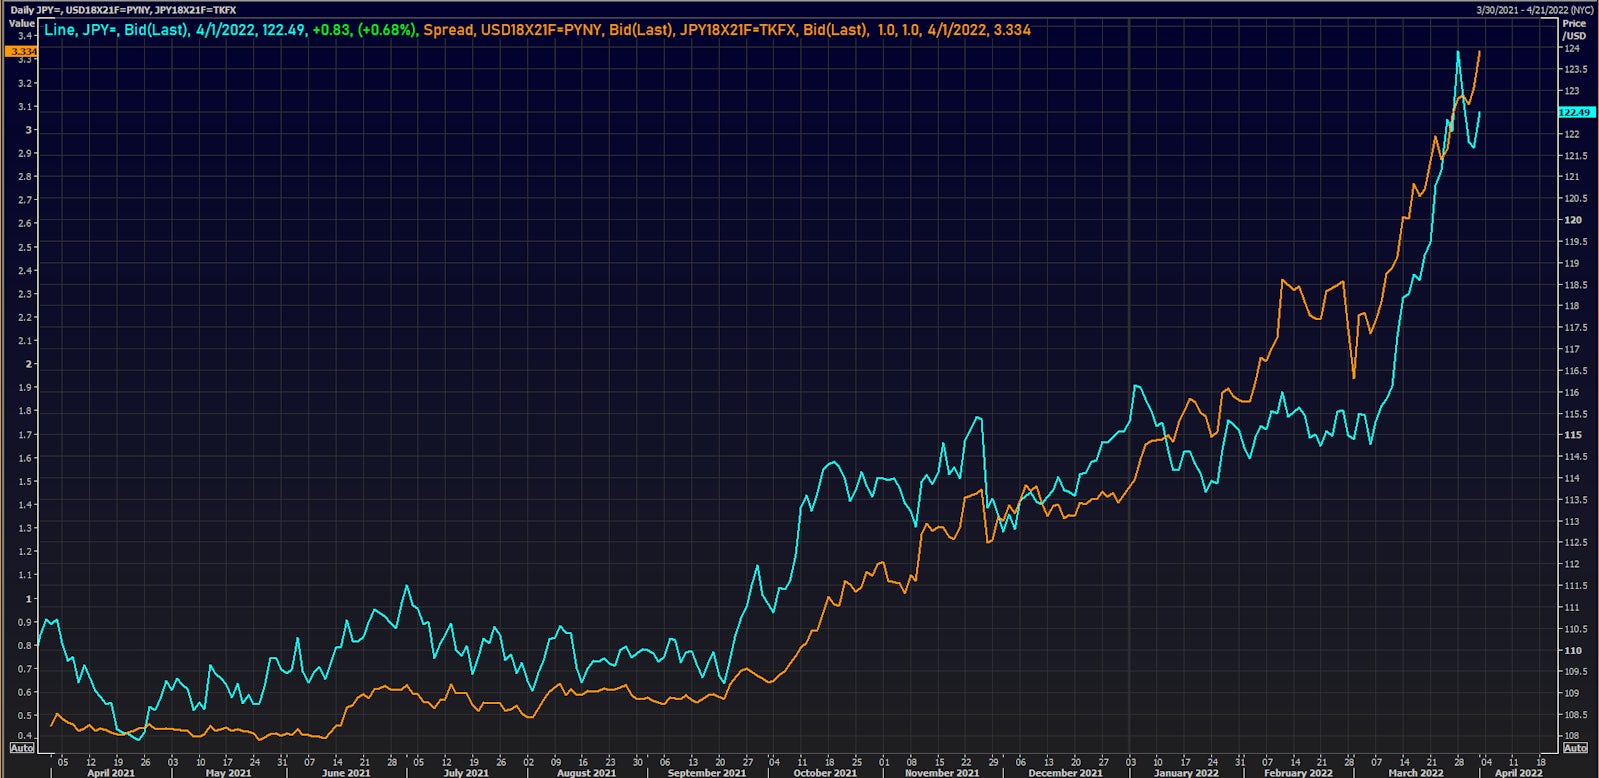 Japanese yen spot rate vs US-JP 18X21 forward rates differential | Source: Refinitiv